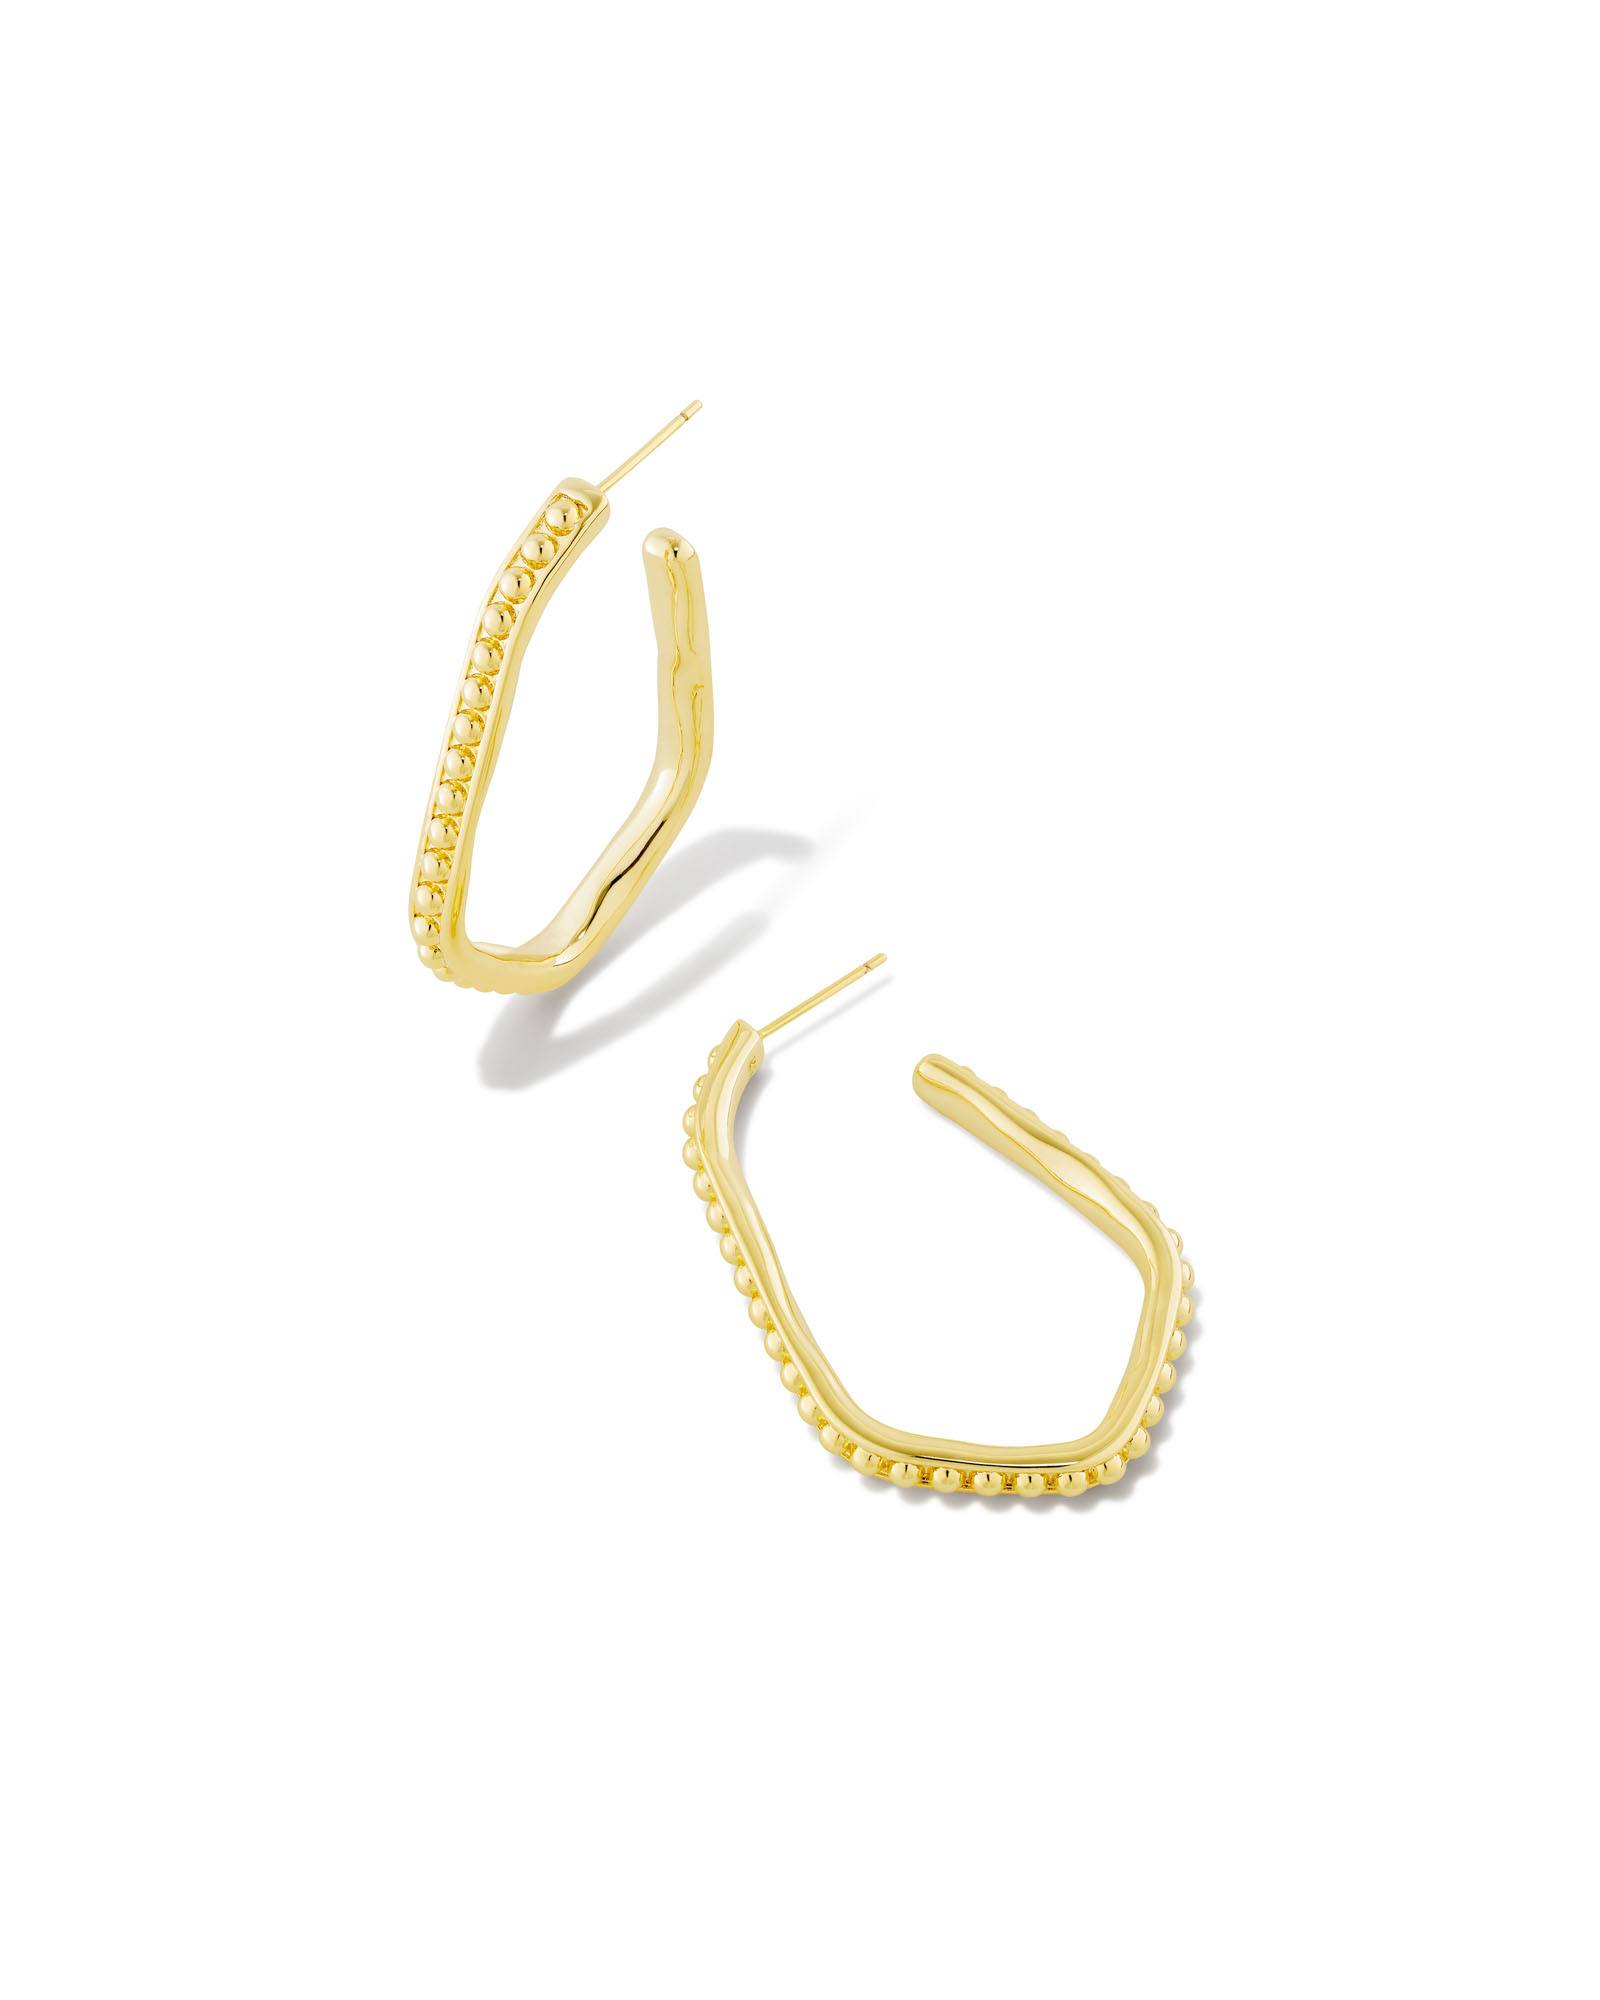 Lonnie Beaded Hoop Earrings in Gold | Kendra Scott